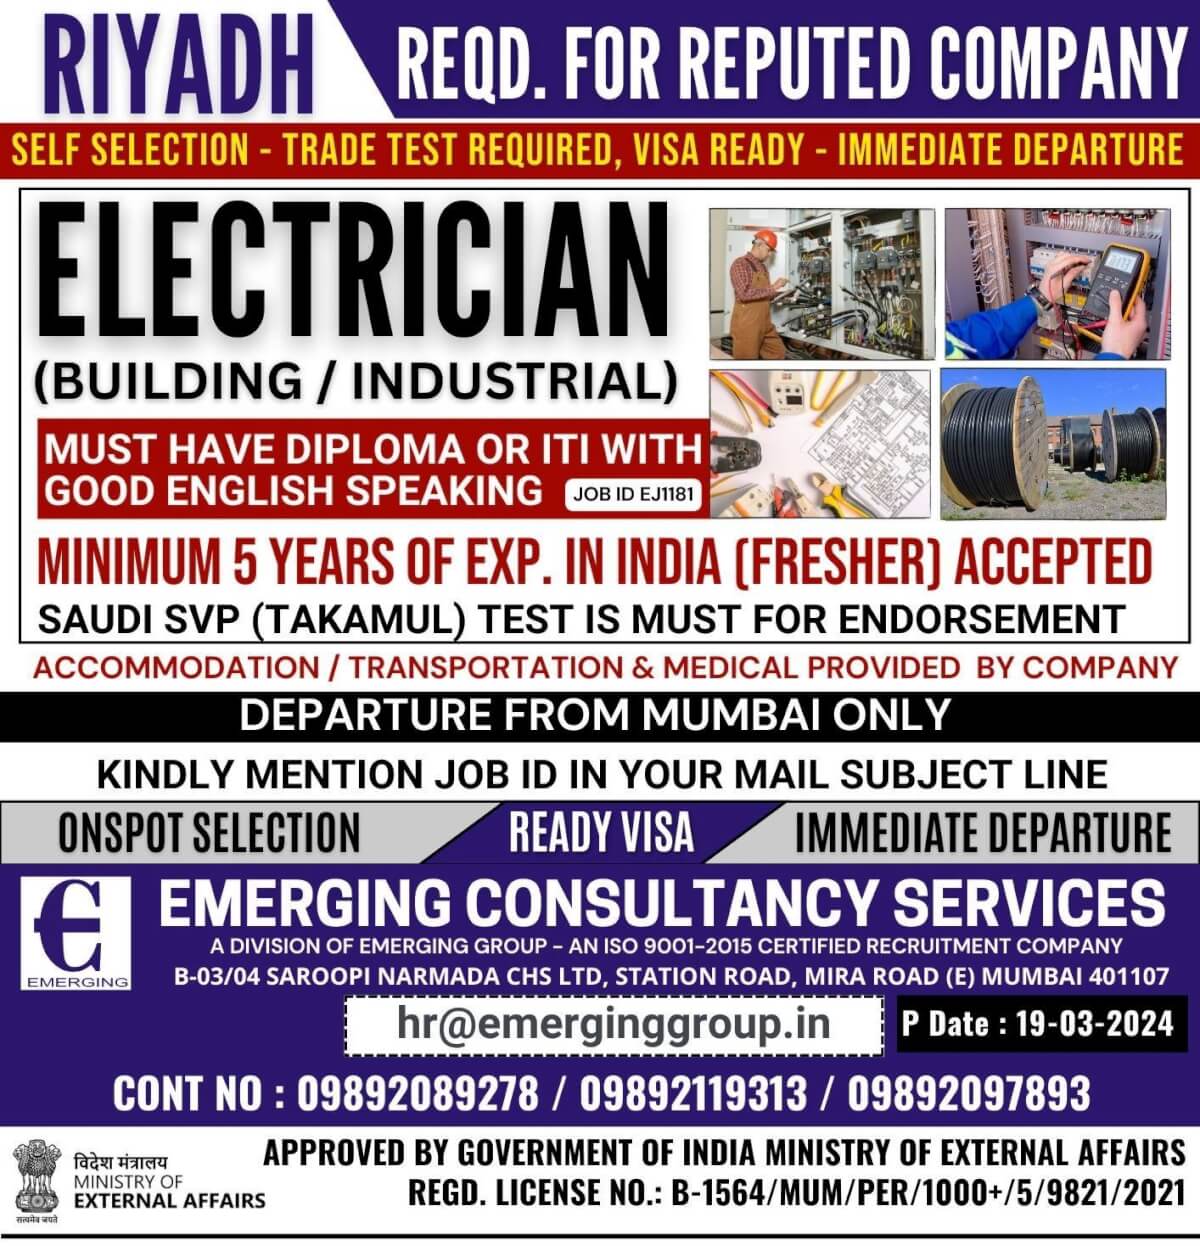 REQD. FOR REPUTED COMPANY IN SAUDI ARABIA